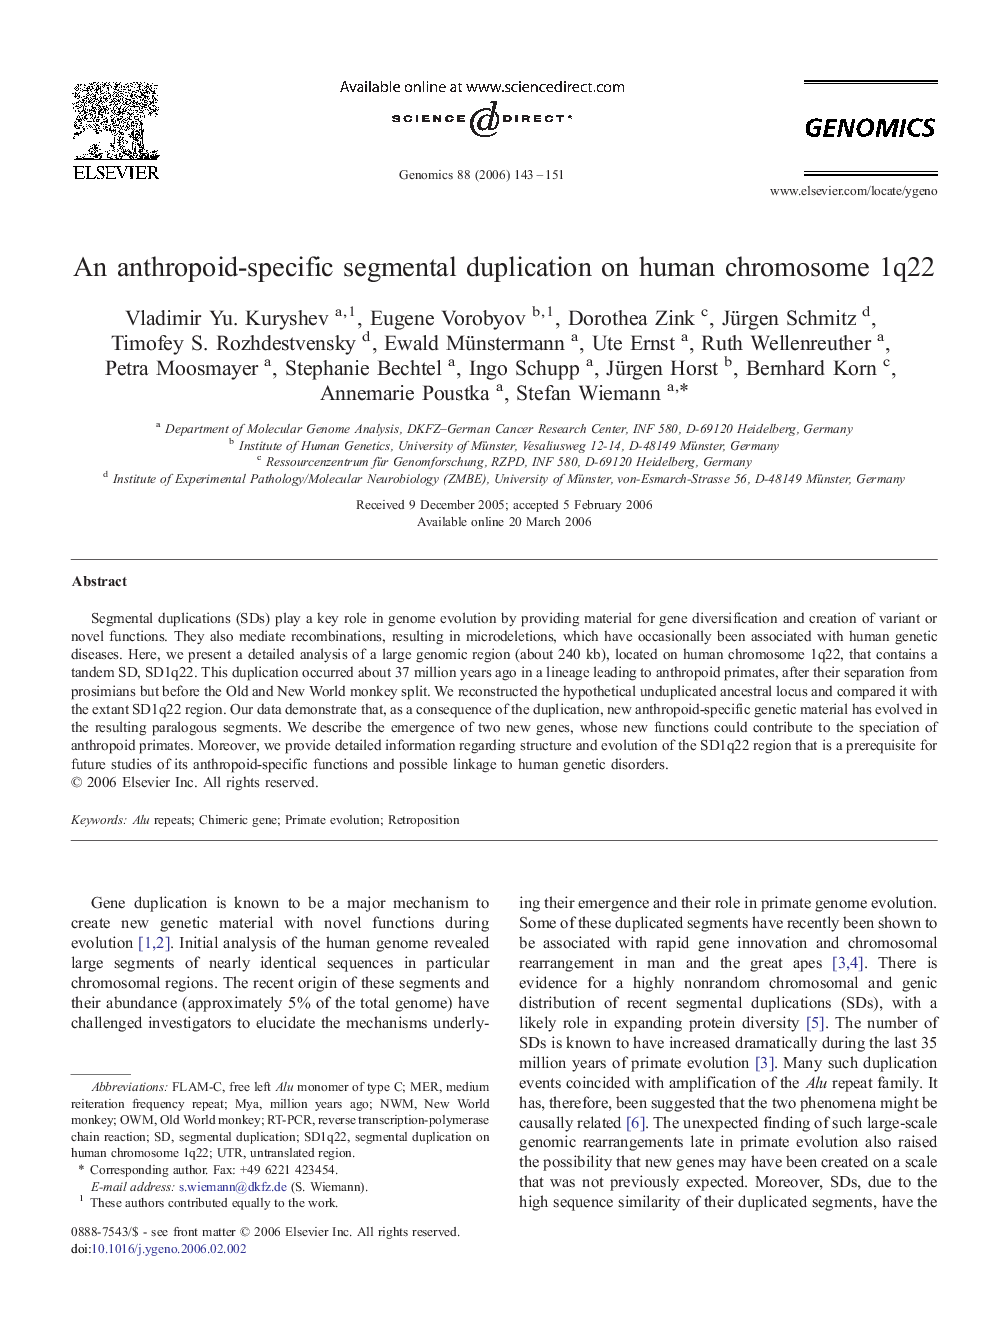 An anthropoid-specific segmental duplication on human chromosome 1q22